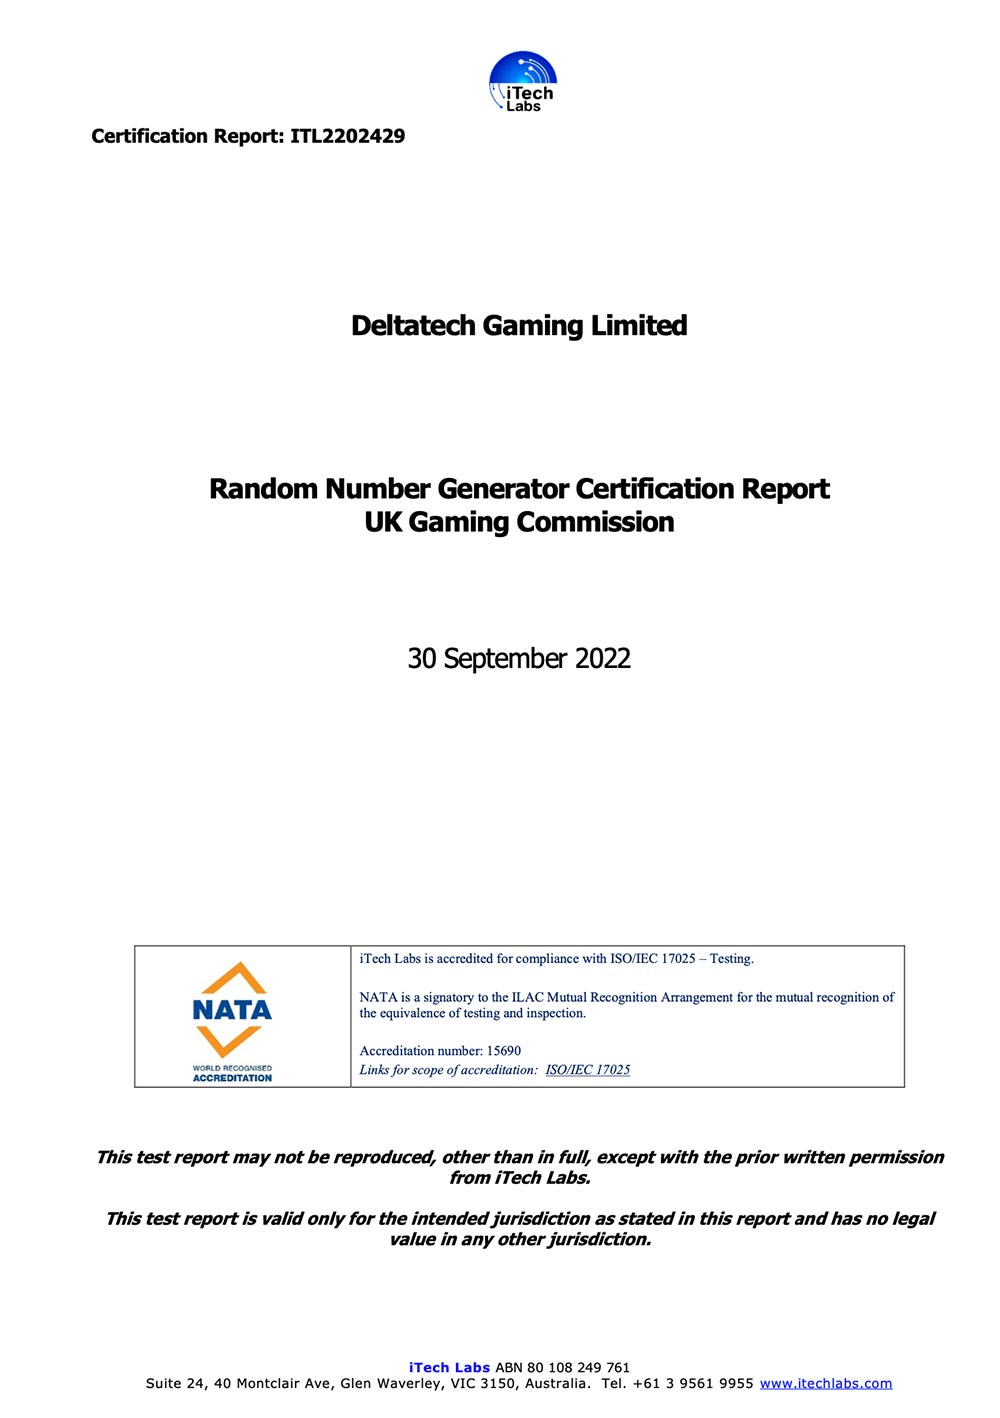 adda52 RNG UK certificate